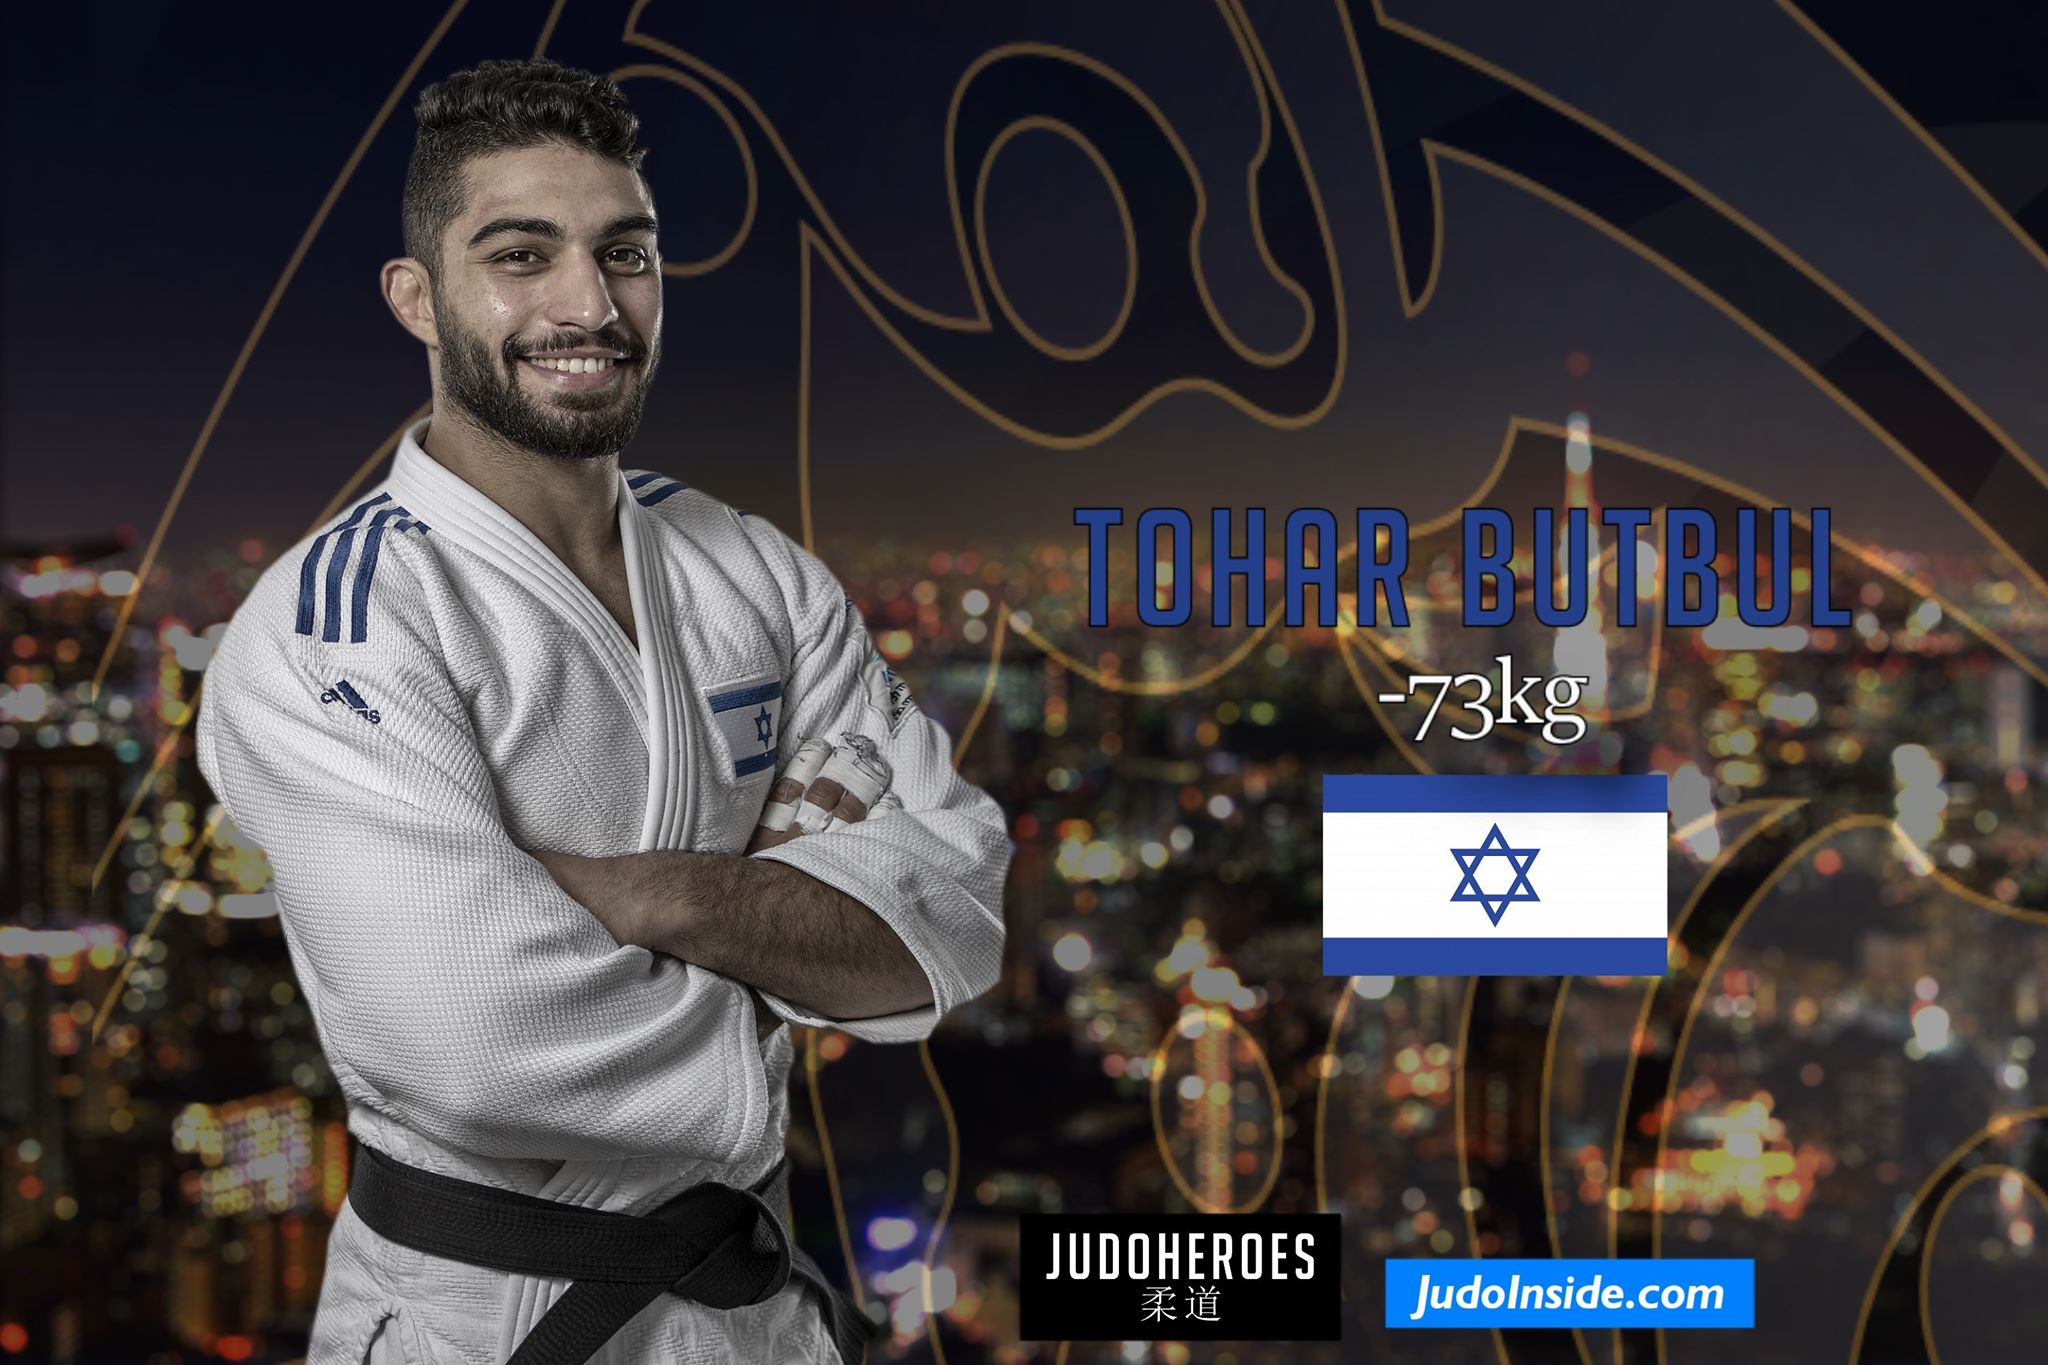 20190824_jh_judoworlds_isr_73_tohar_butbul